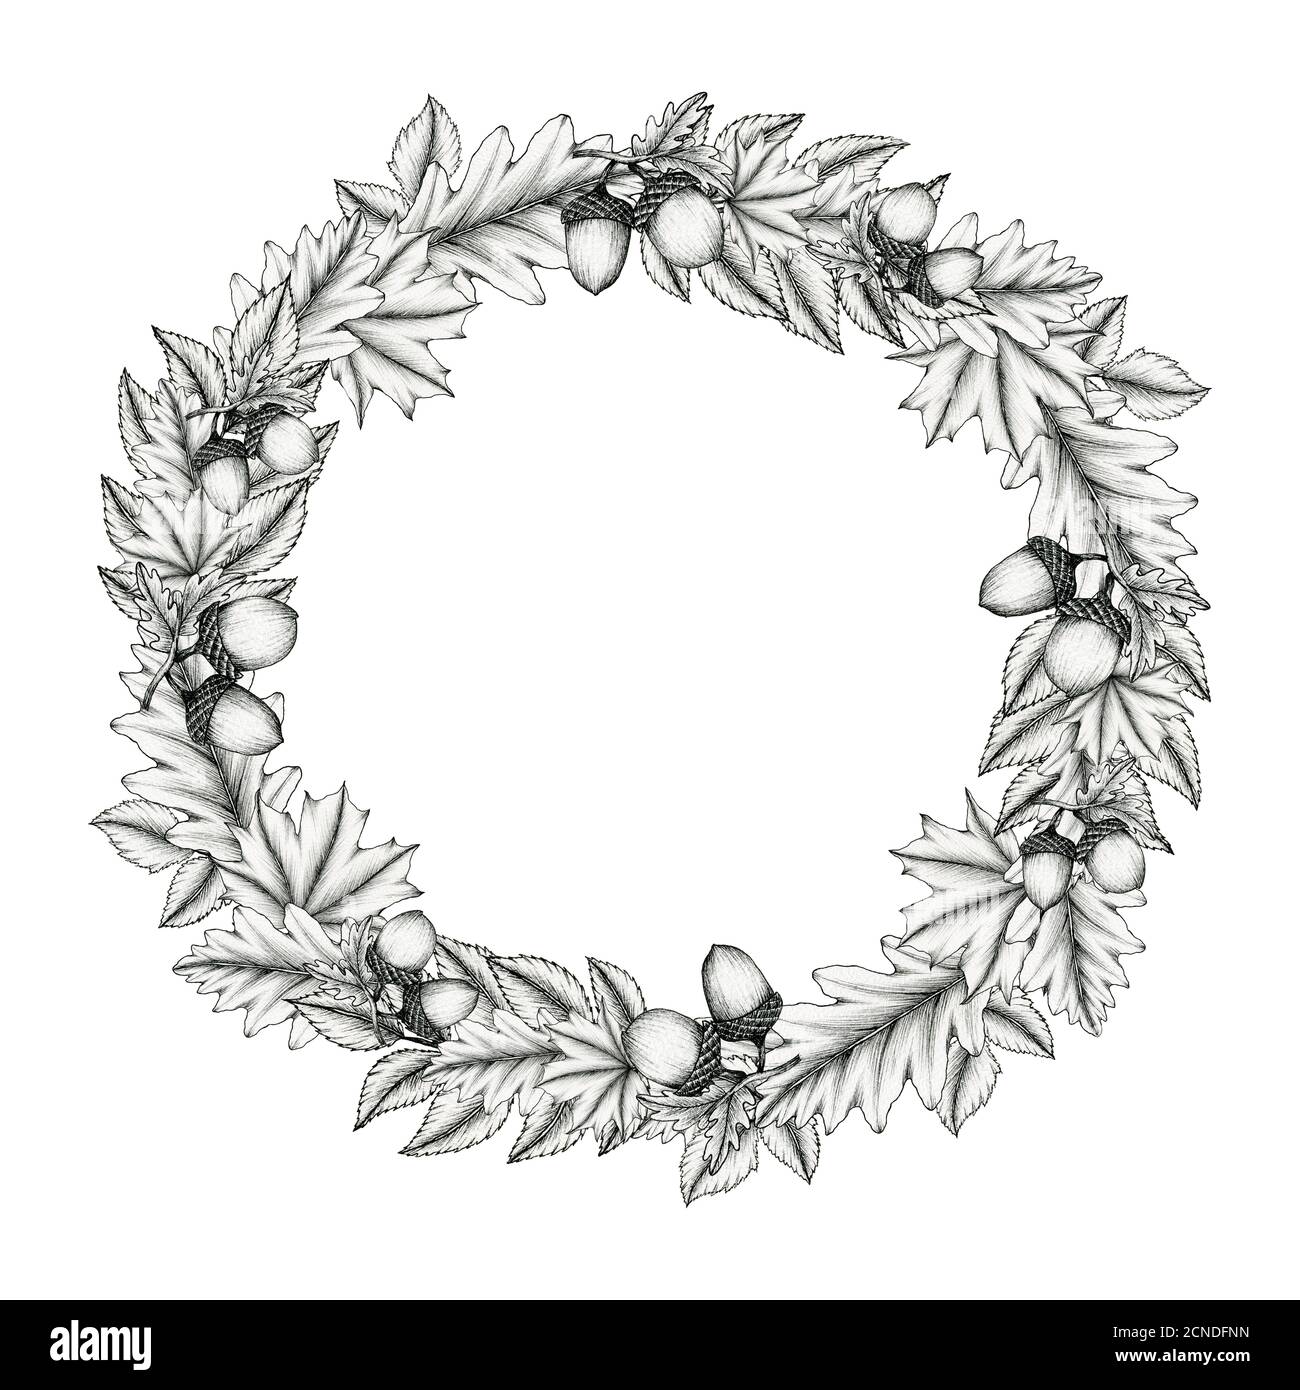 vintage autumn wreath decoration with acorns, maple leaf and oak leaf, black and white ink fall botanical illustration for wedding, greeting card Stock Photo